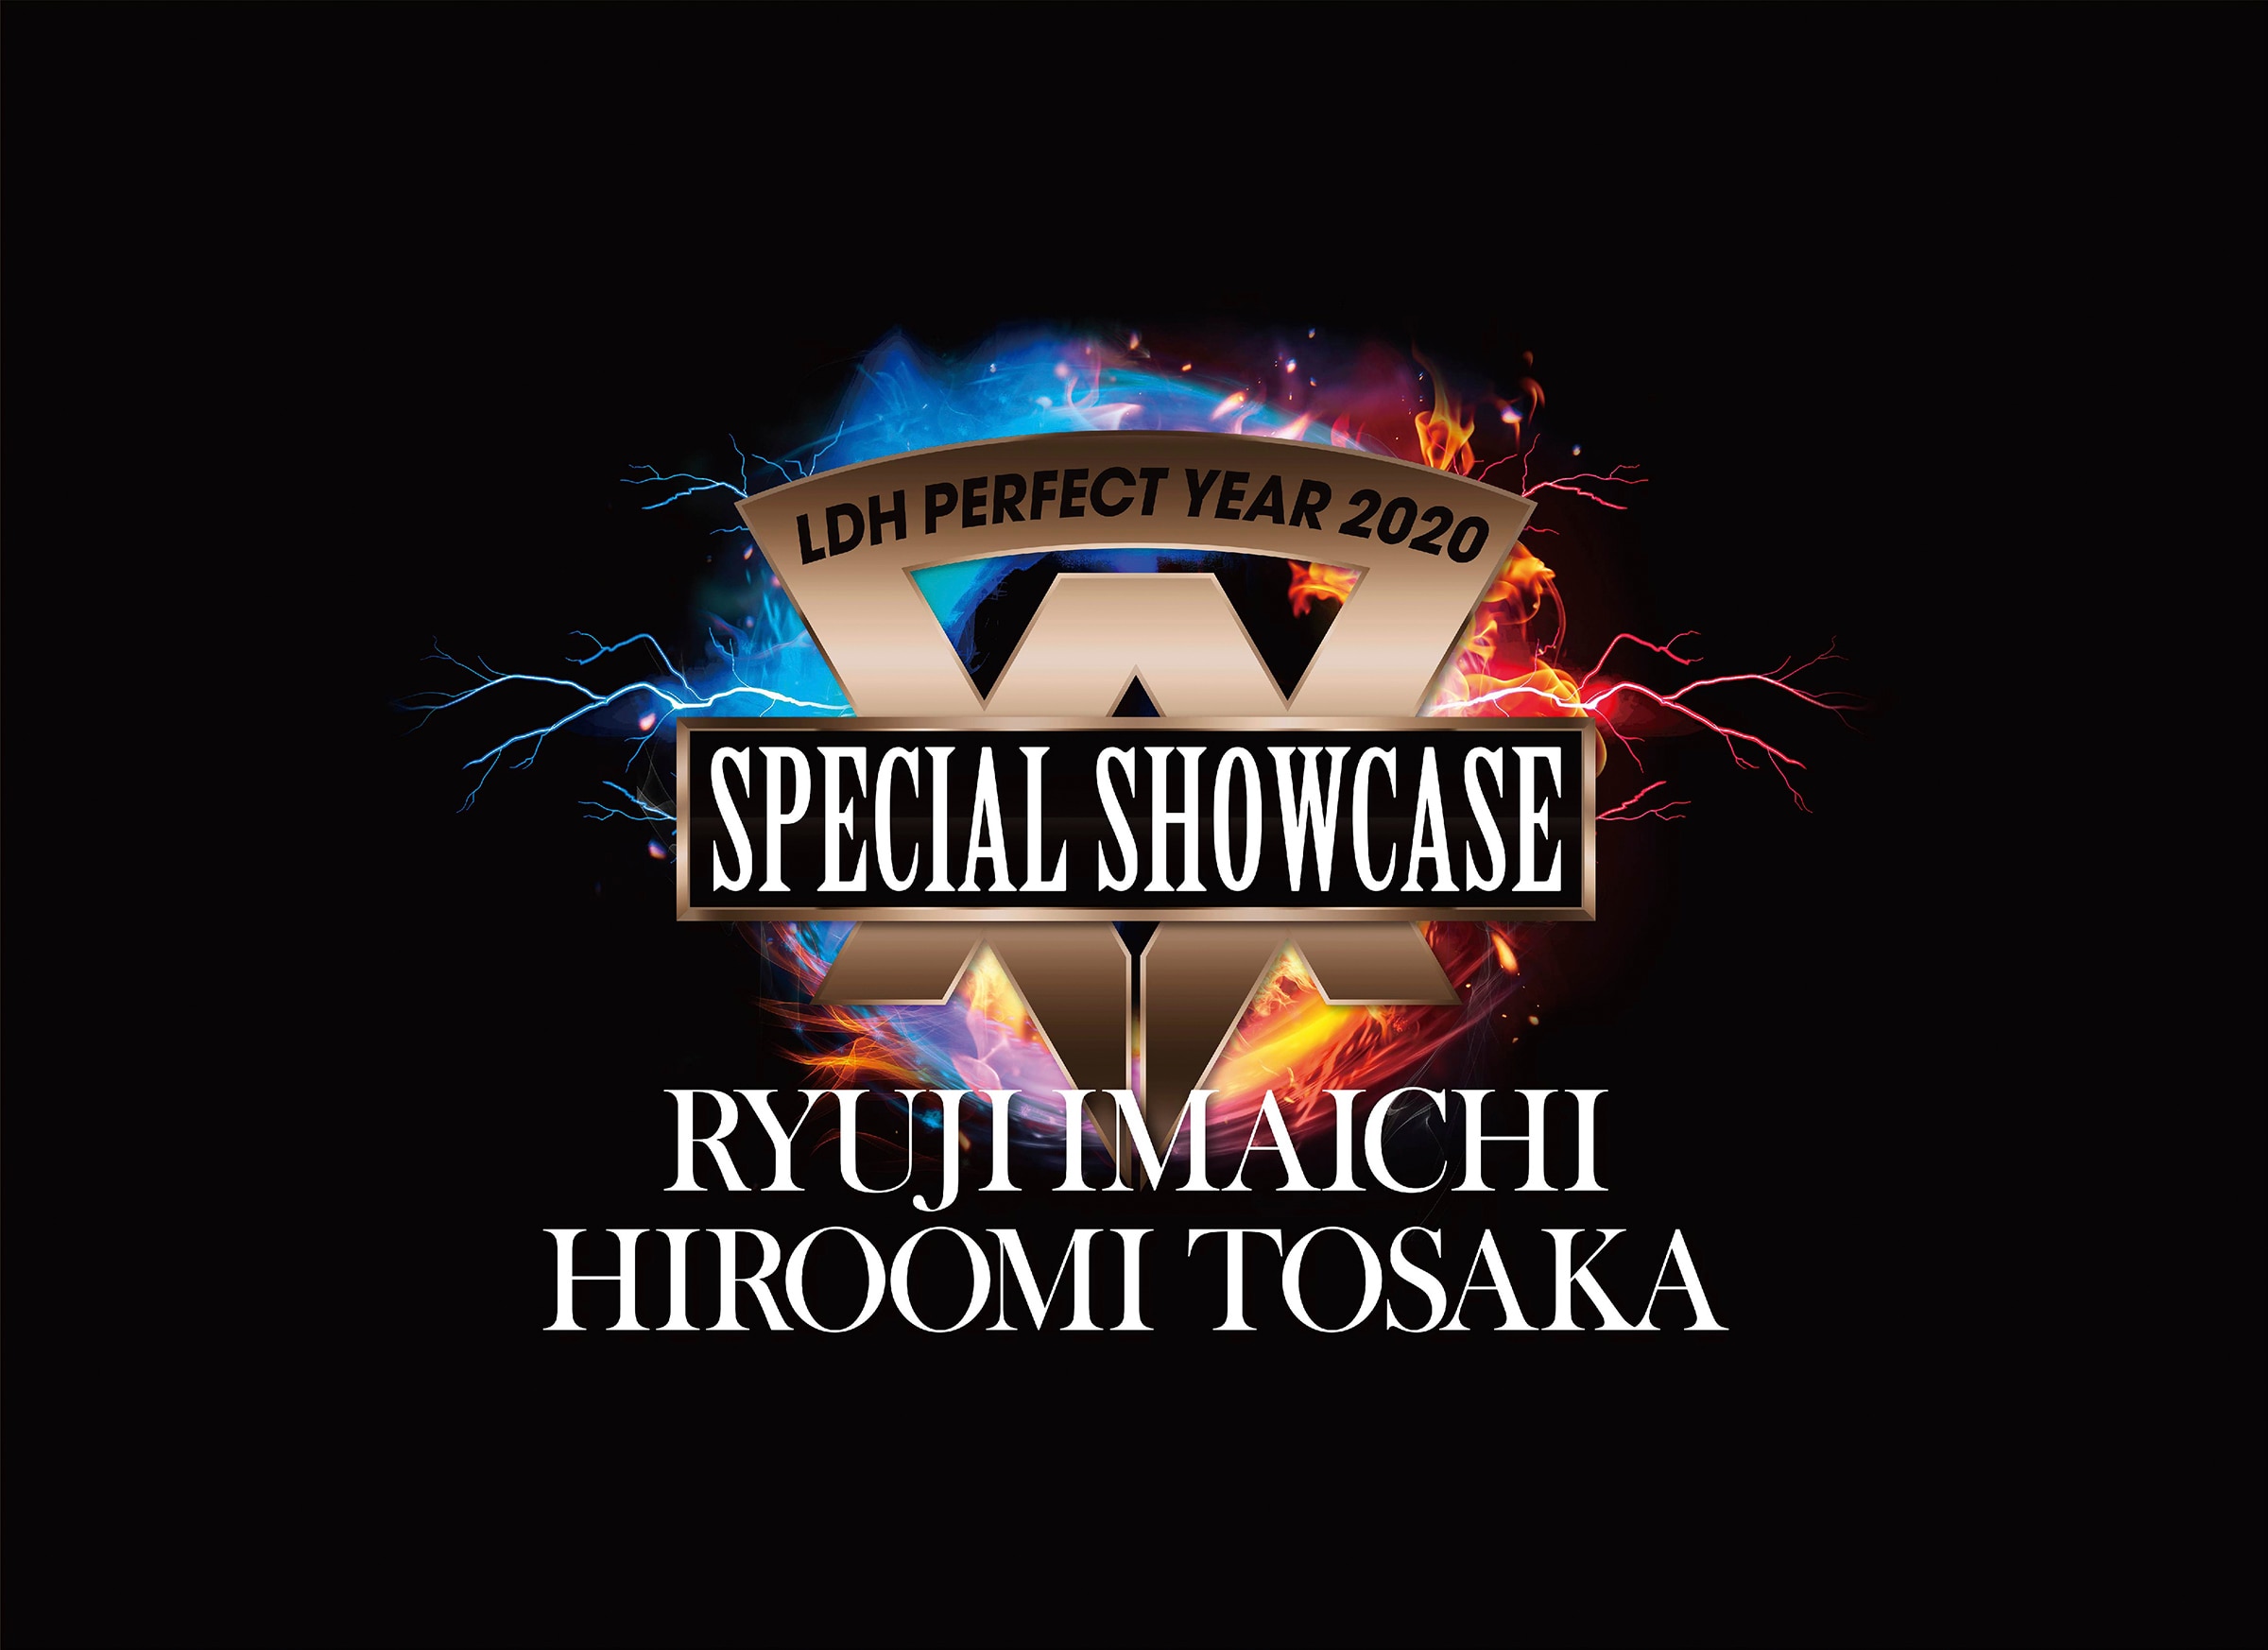 LDH PERFECT YEAR 2020 SPECIAL SHOWCASE RYUJI IMAICHI / HIROOMI TOSAKA【DVD3枚組】